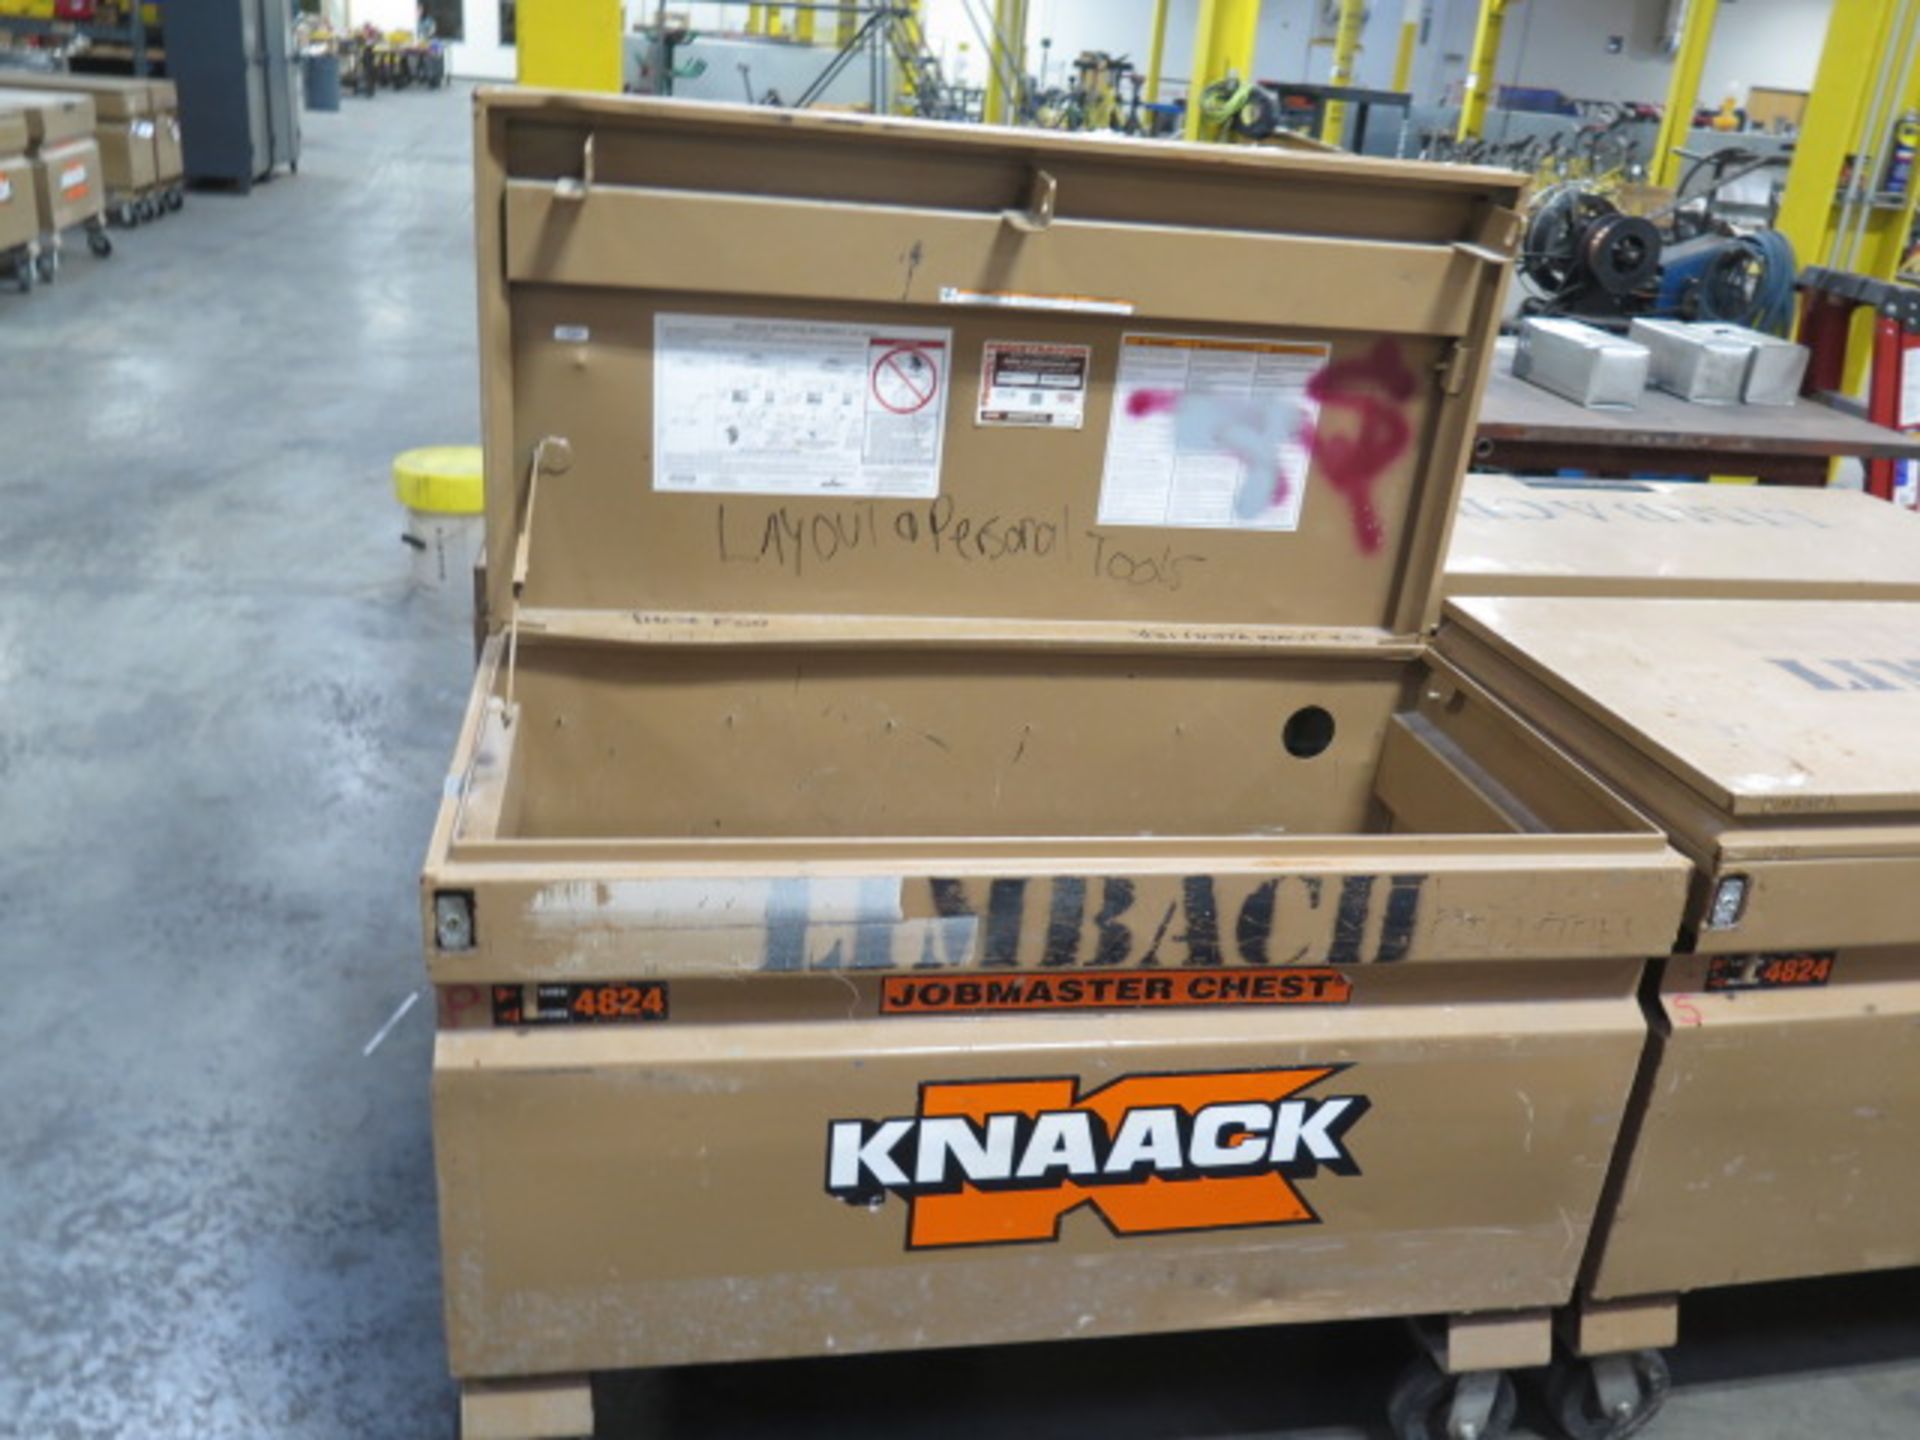 Knaack mdl. 4824 Rolling Job Box (SOLD AS-IS - NO WARRANTY) - Image 3 of 6